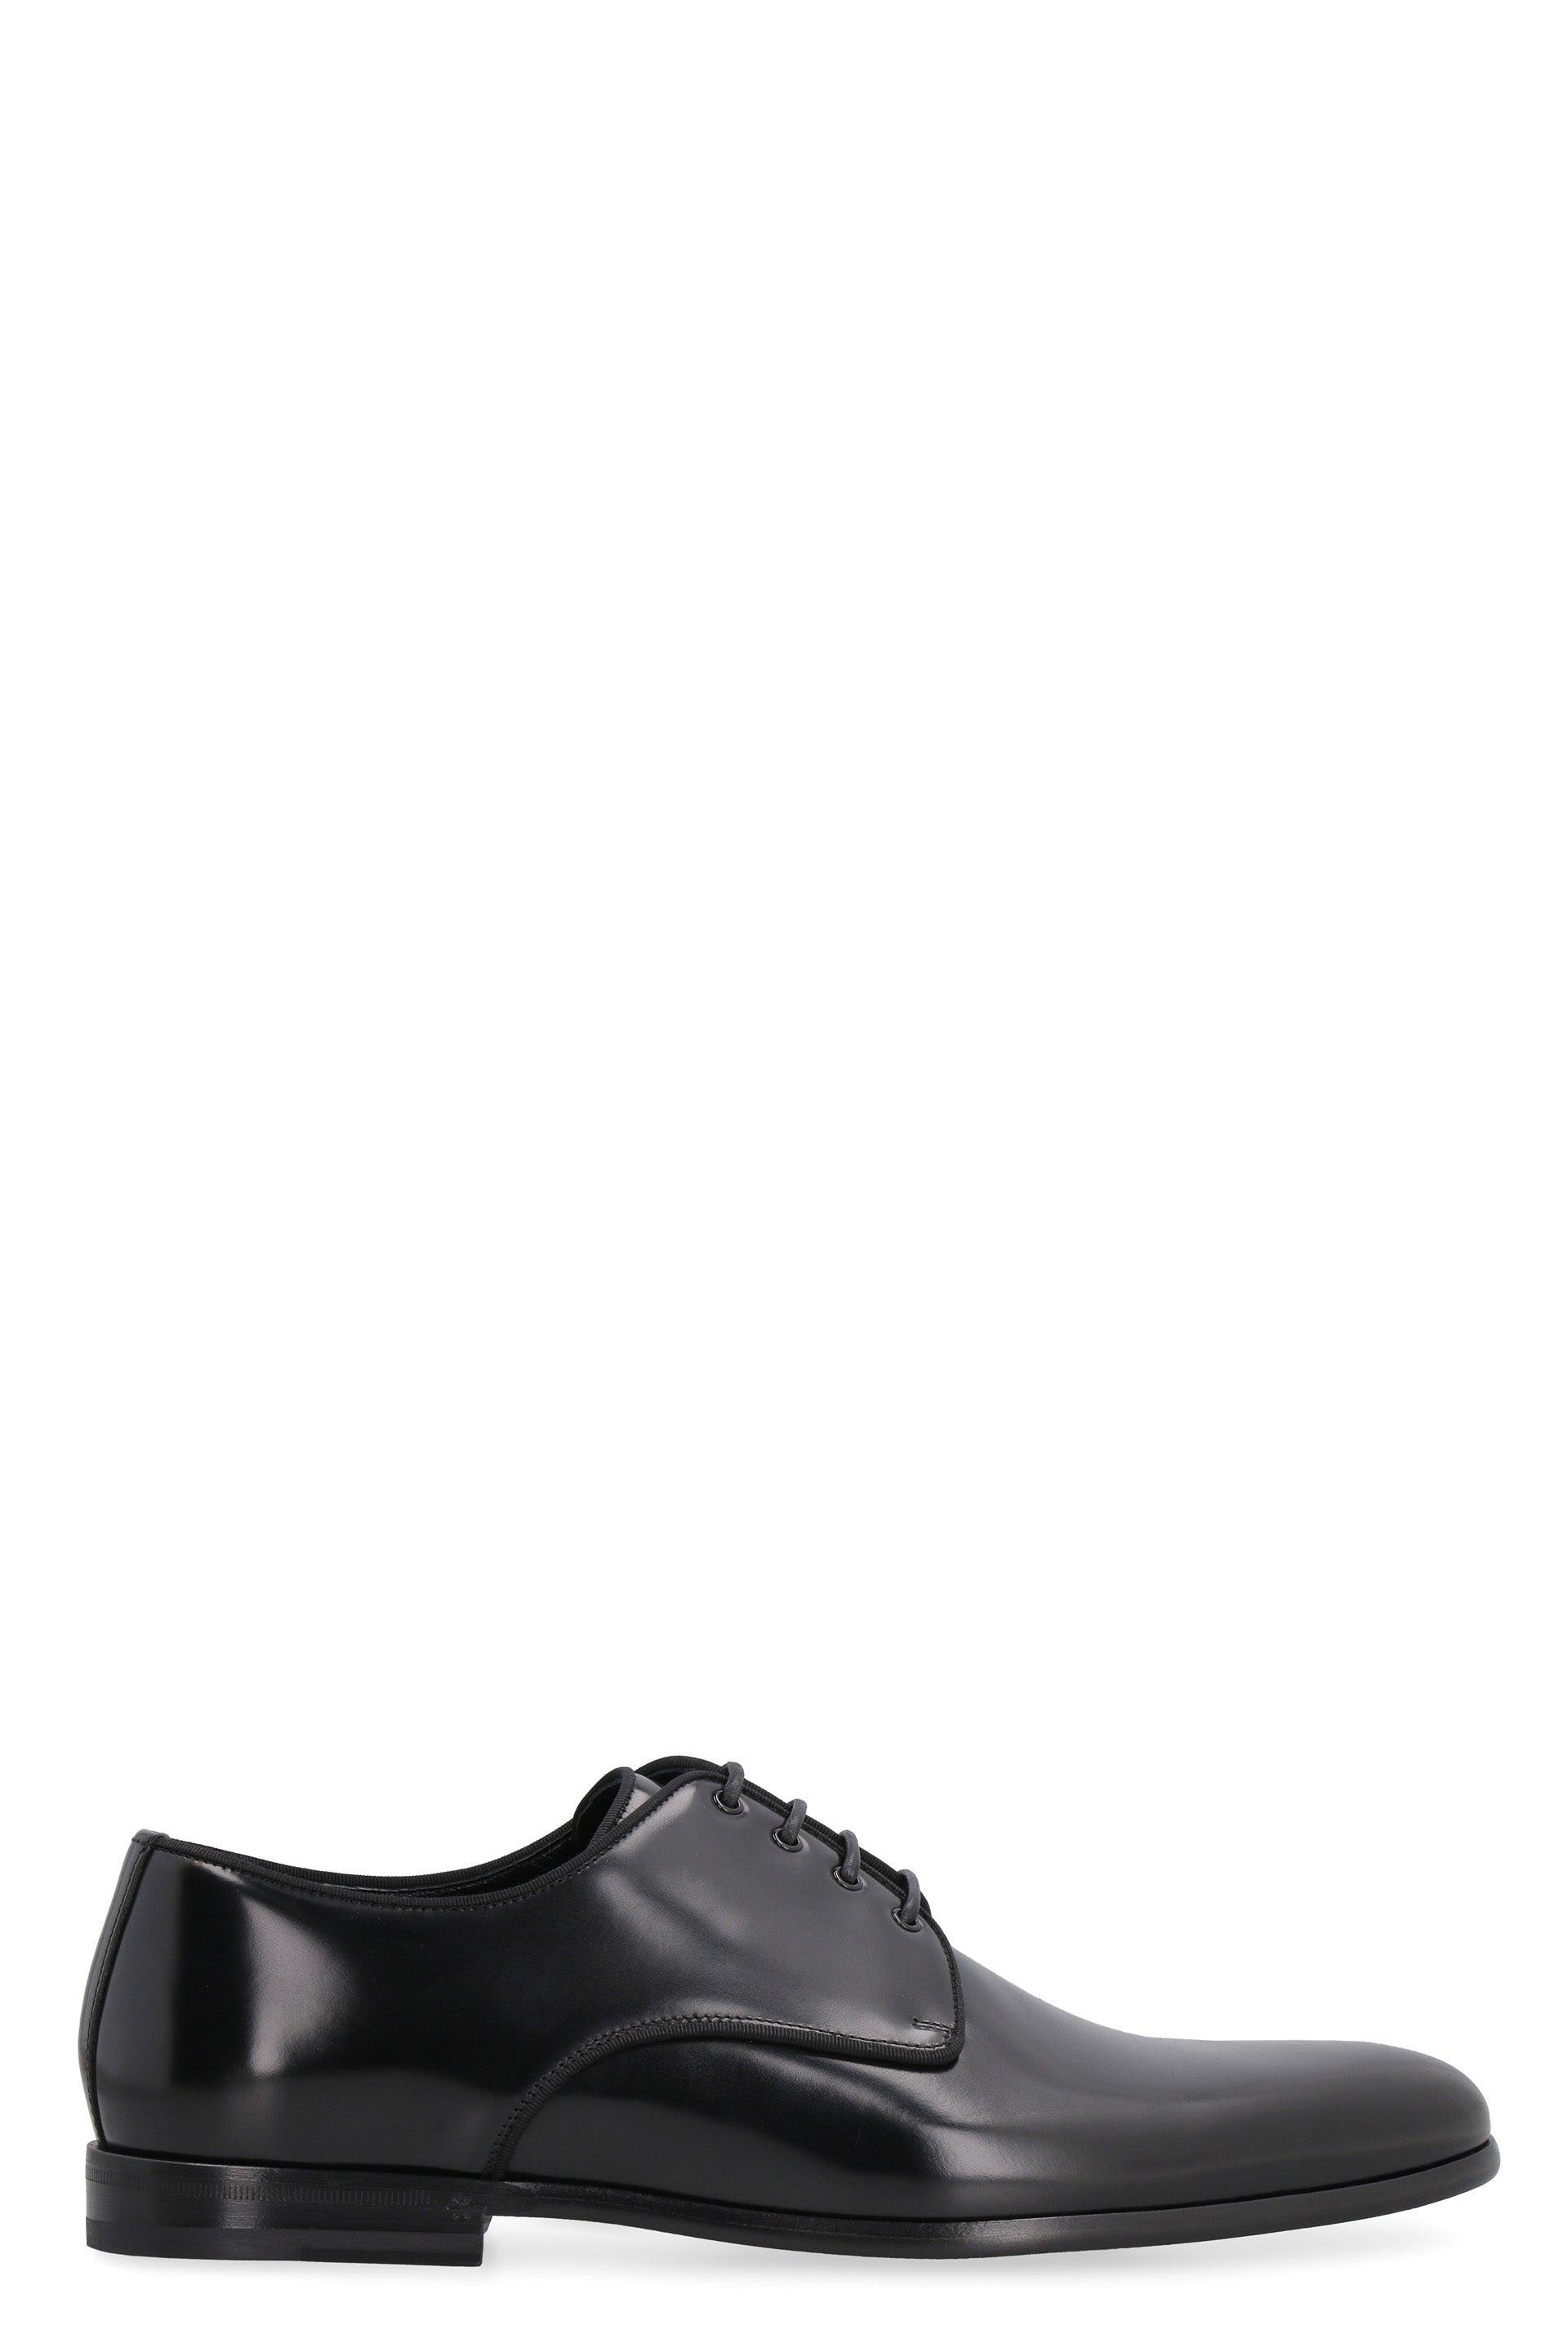 Dolce & Gabbana Leather Raffaello Lace-up Shoe in Black for Men Mens Shoes Lace-ups Oxford shoes 